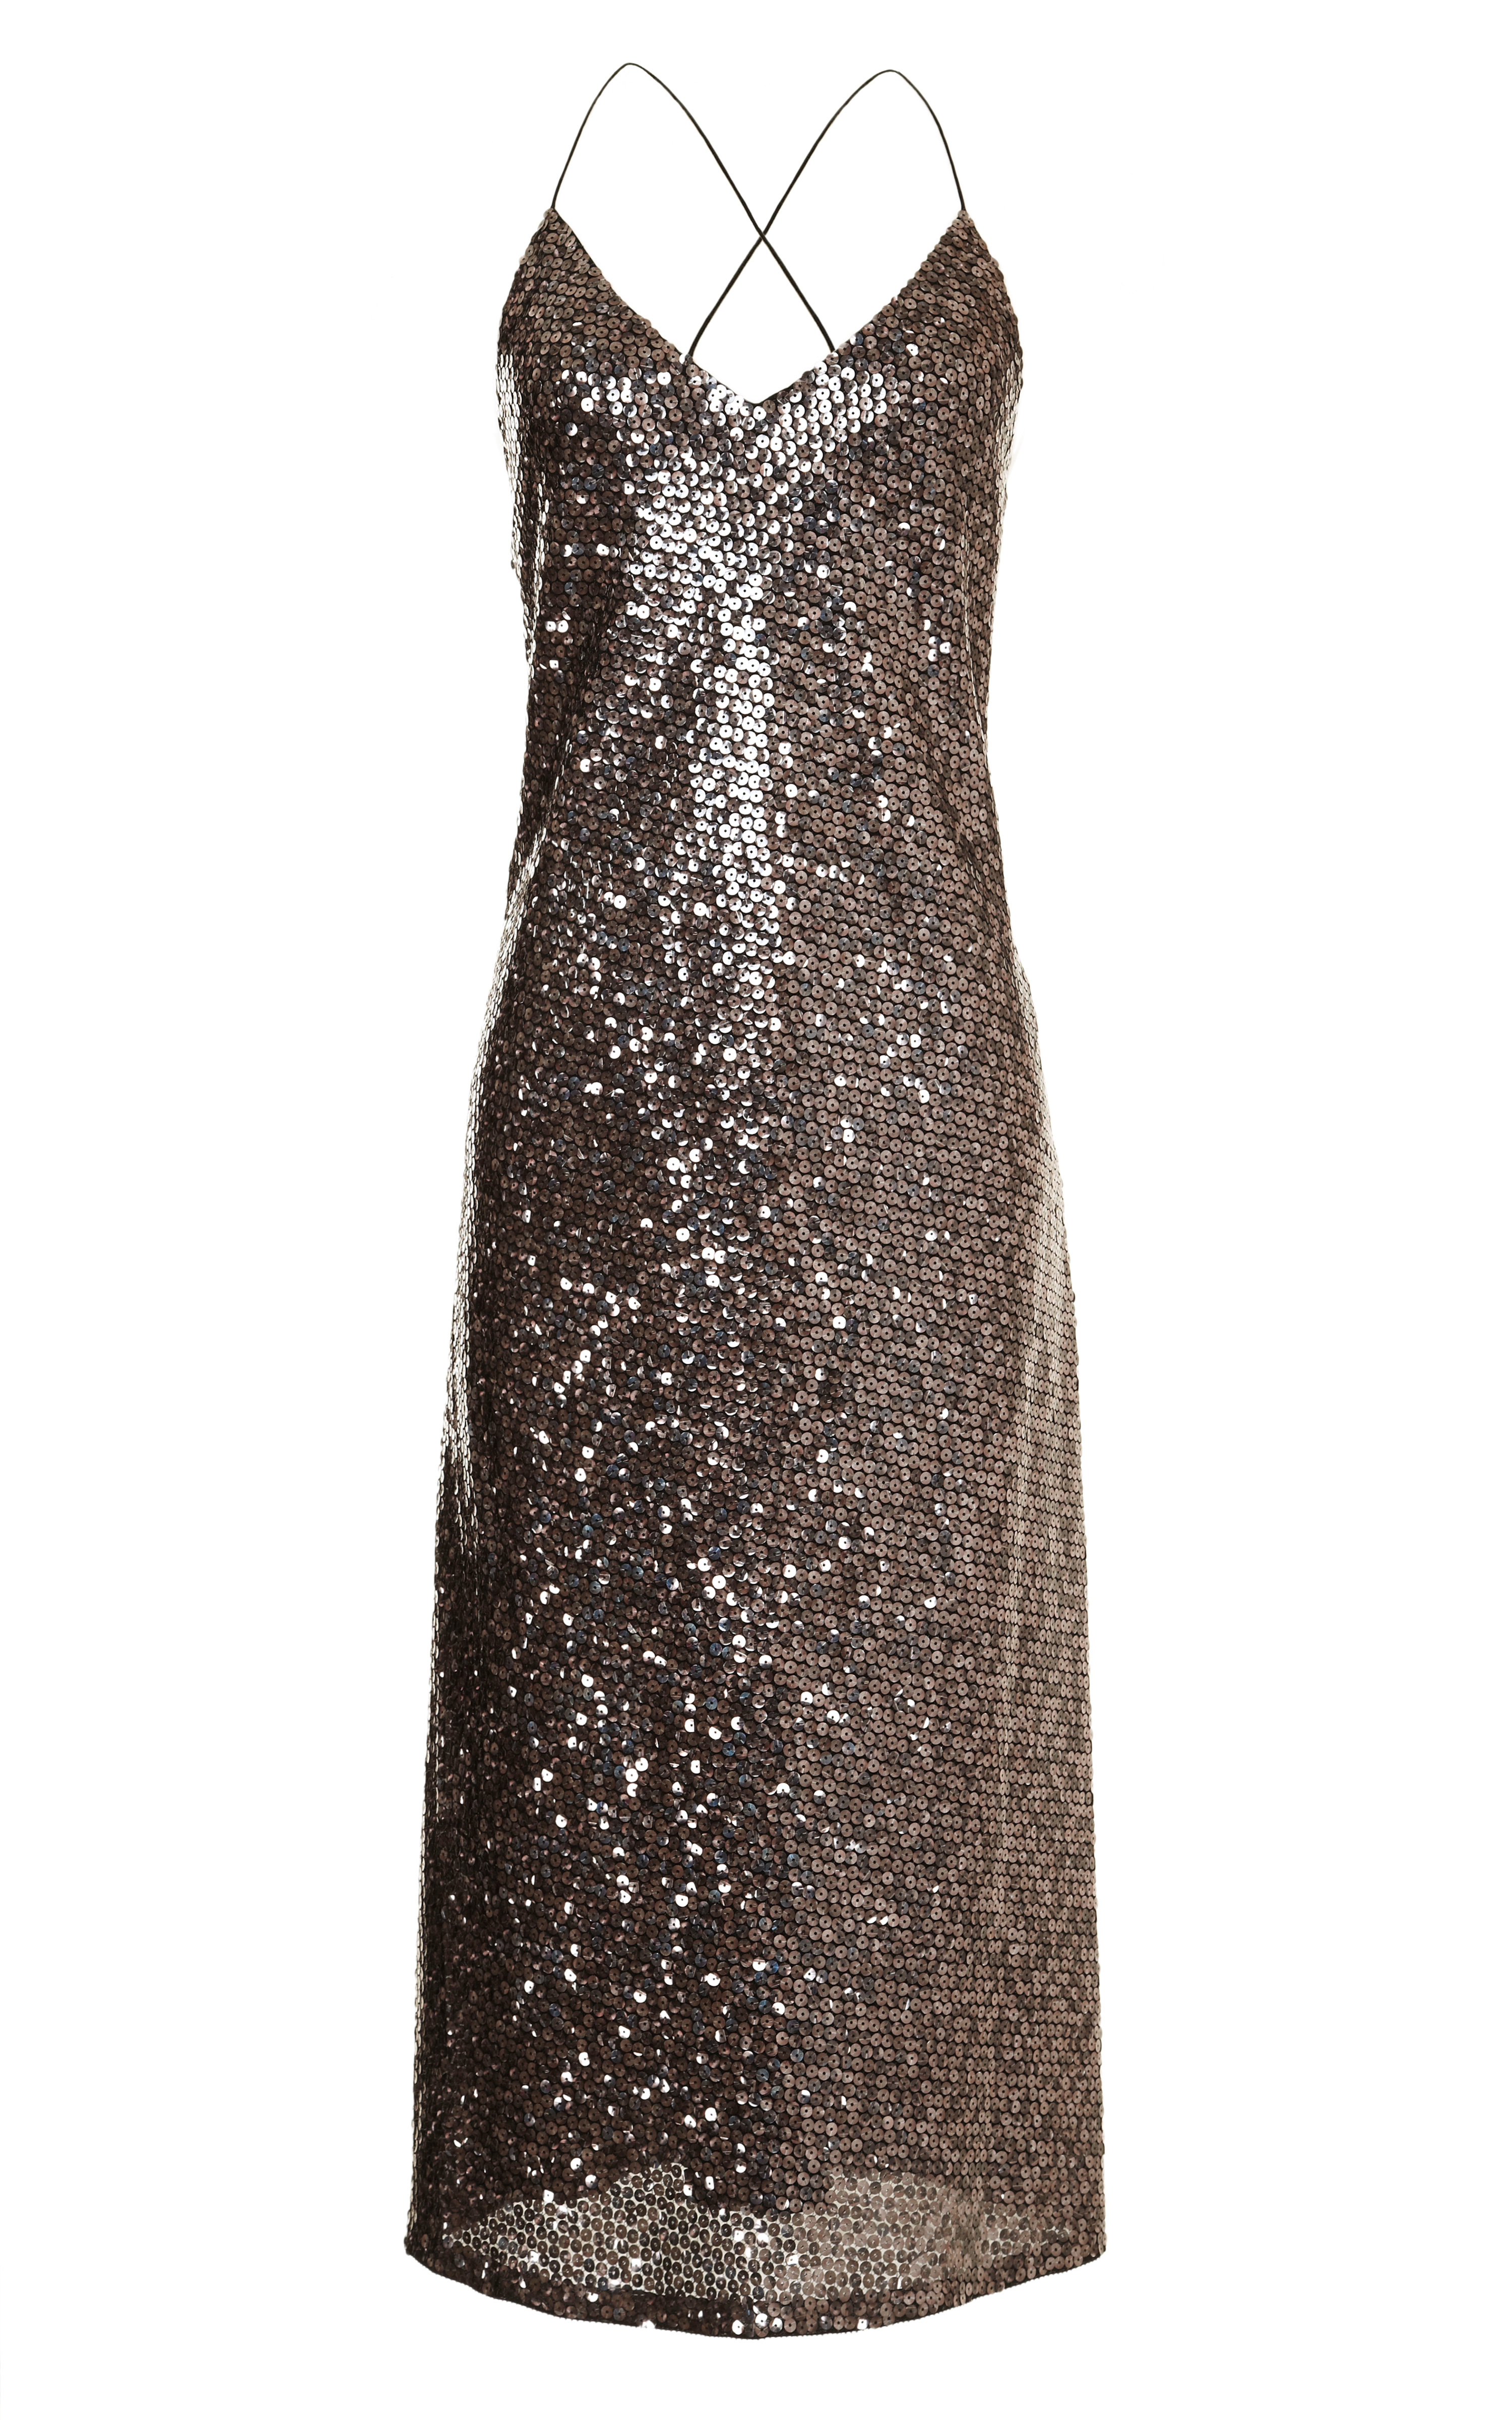 Lyst - Marc Jacobs Mirror Sequins Tea Length Tank Dress in Metallic